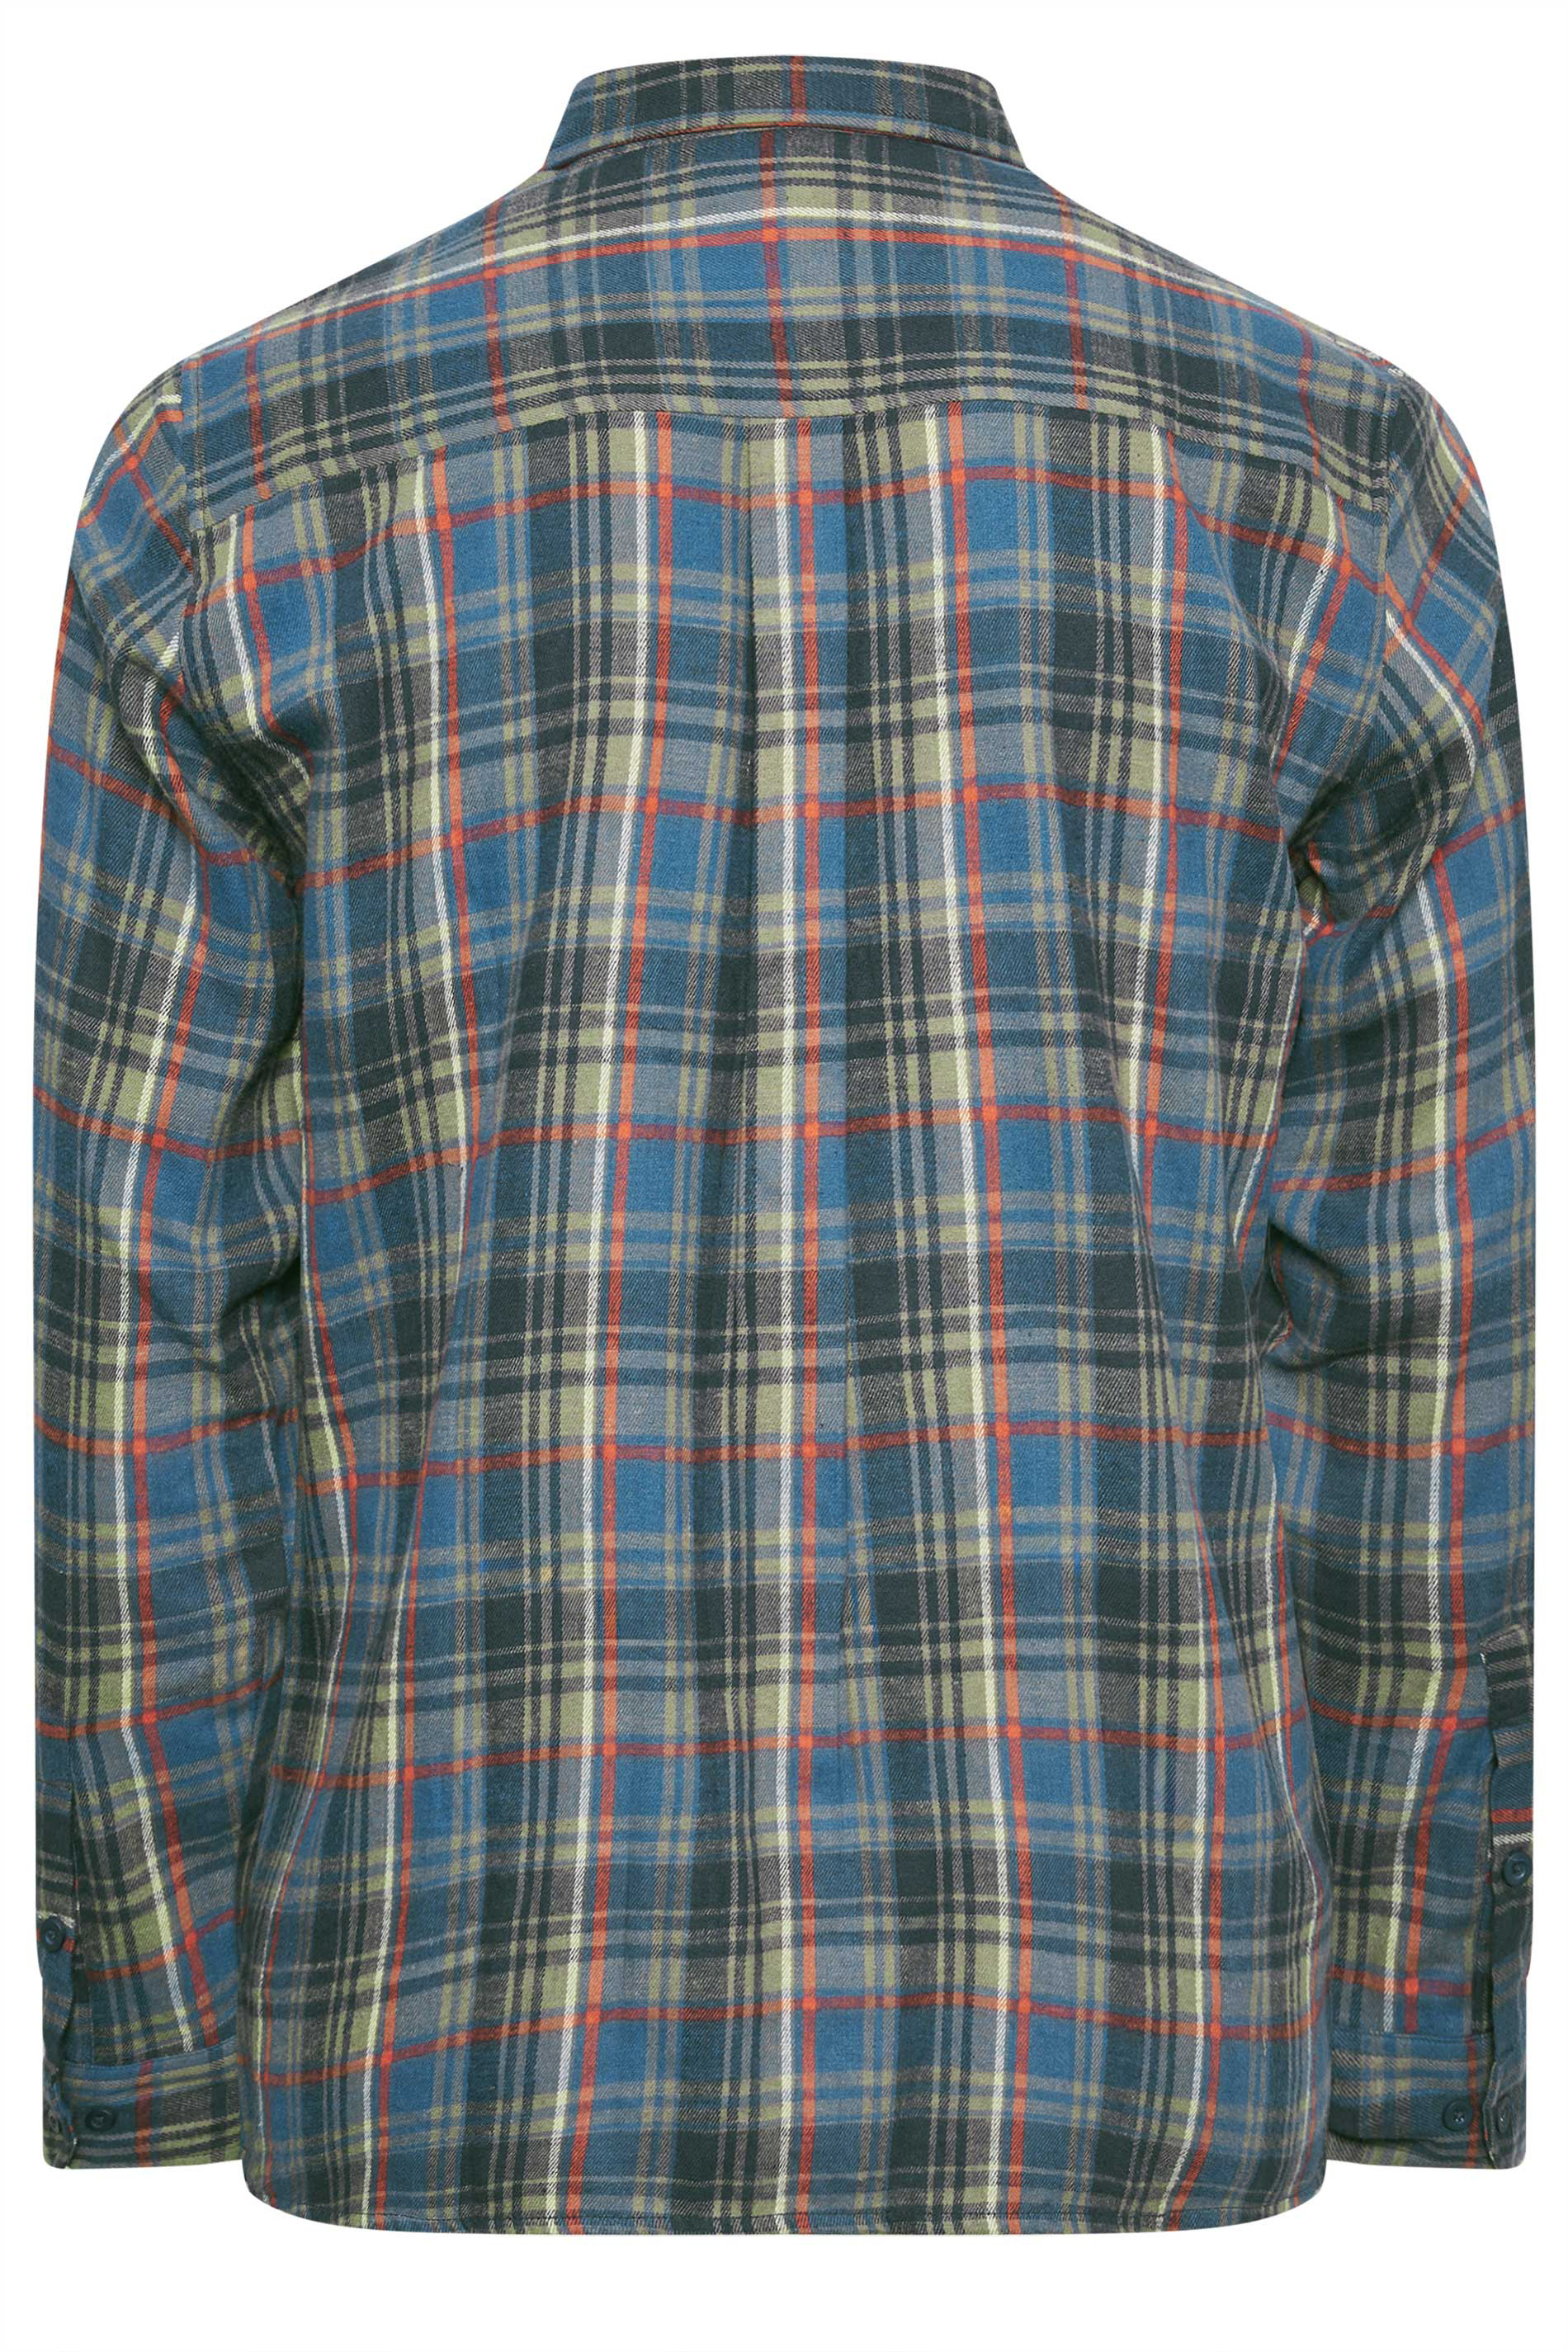 BadRhino Big & Tall Green & Blue Brushed Cotton Check Long Sleeve Shirt 3